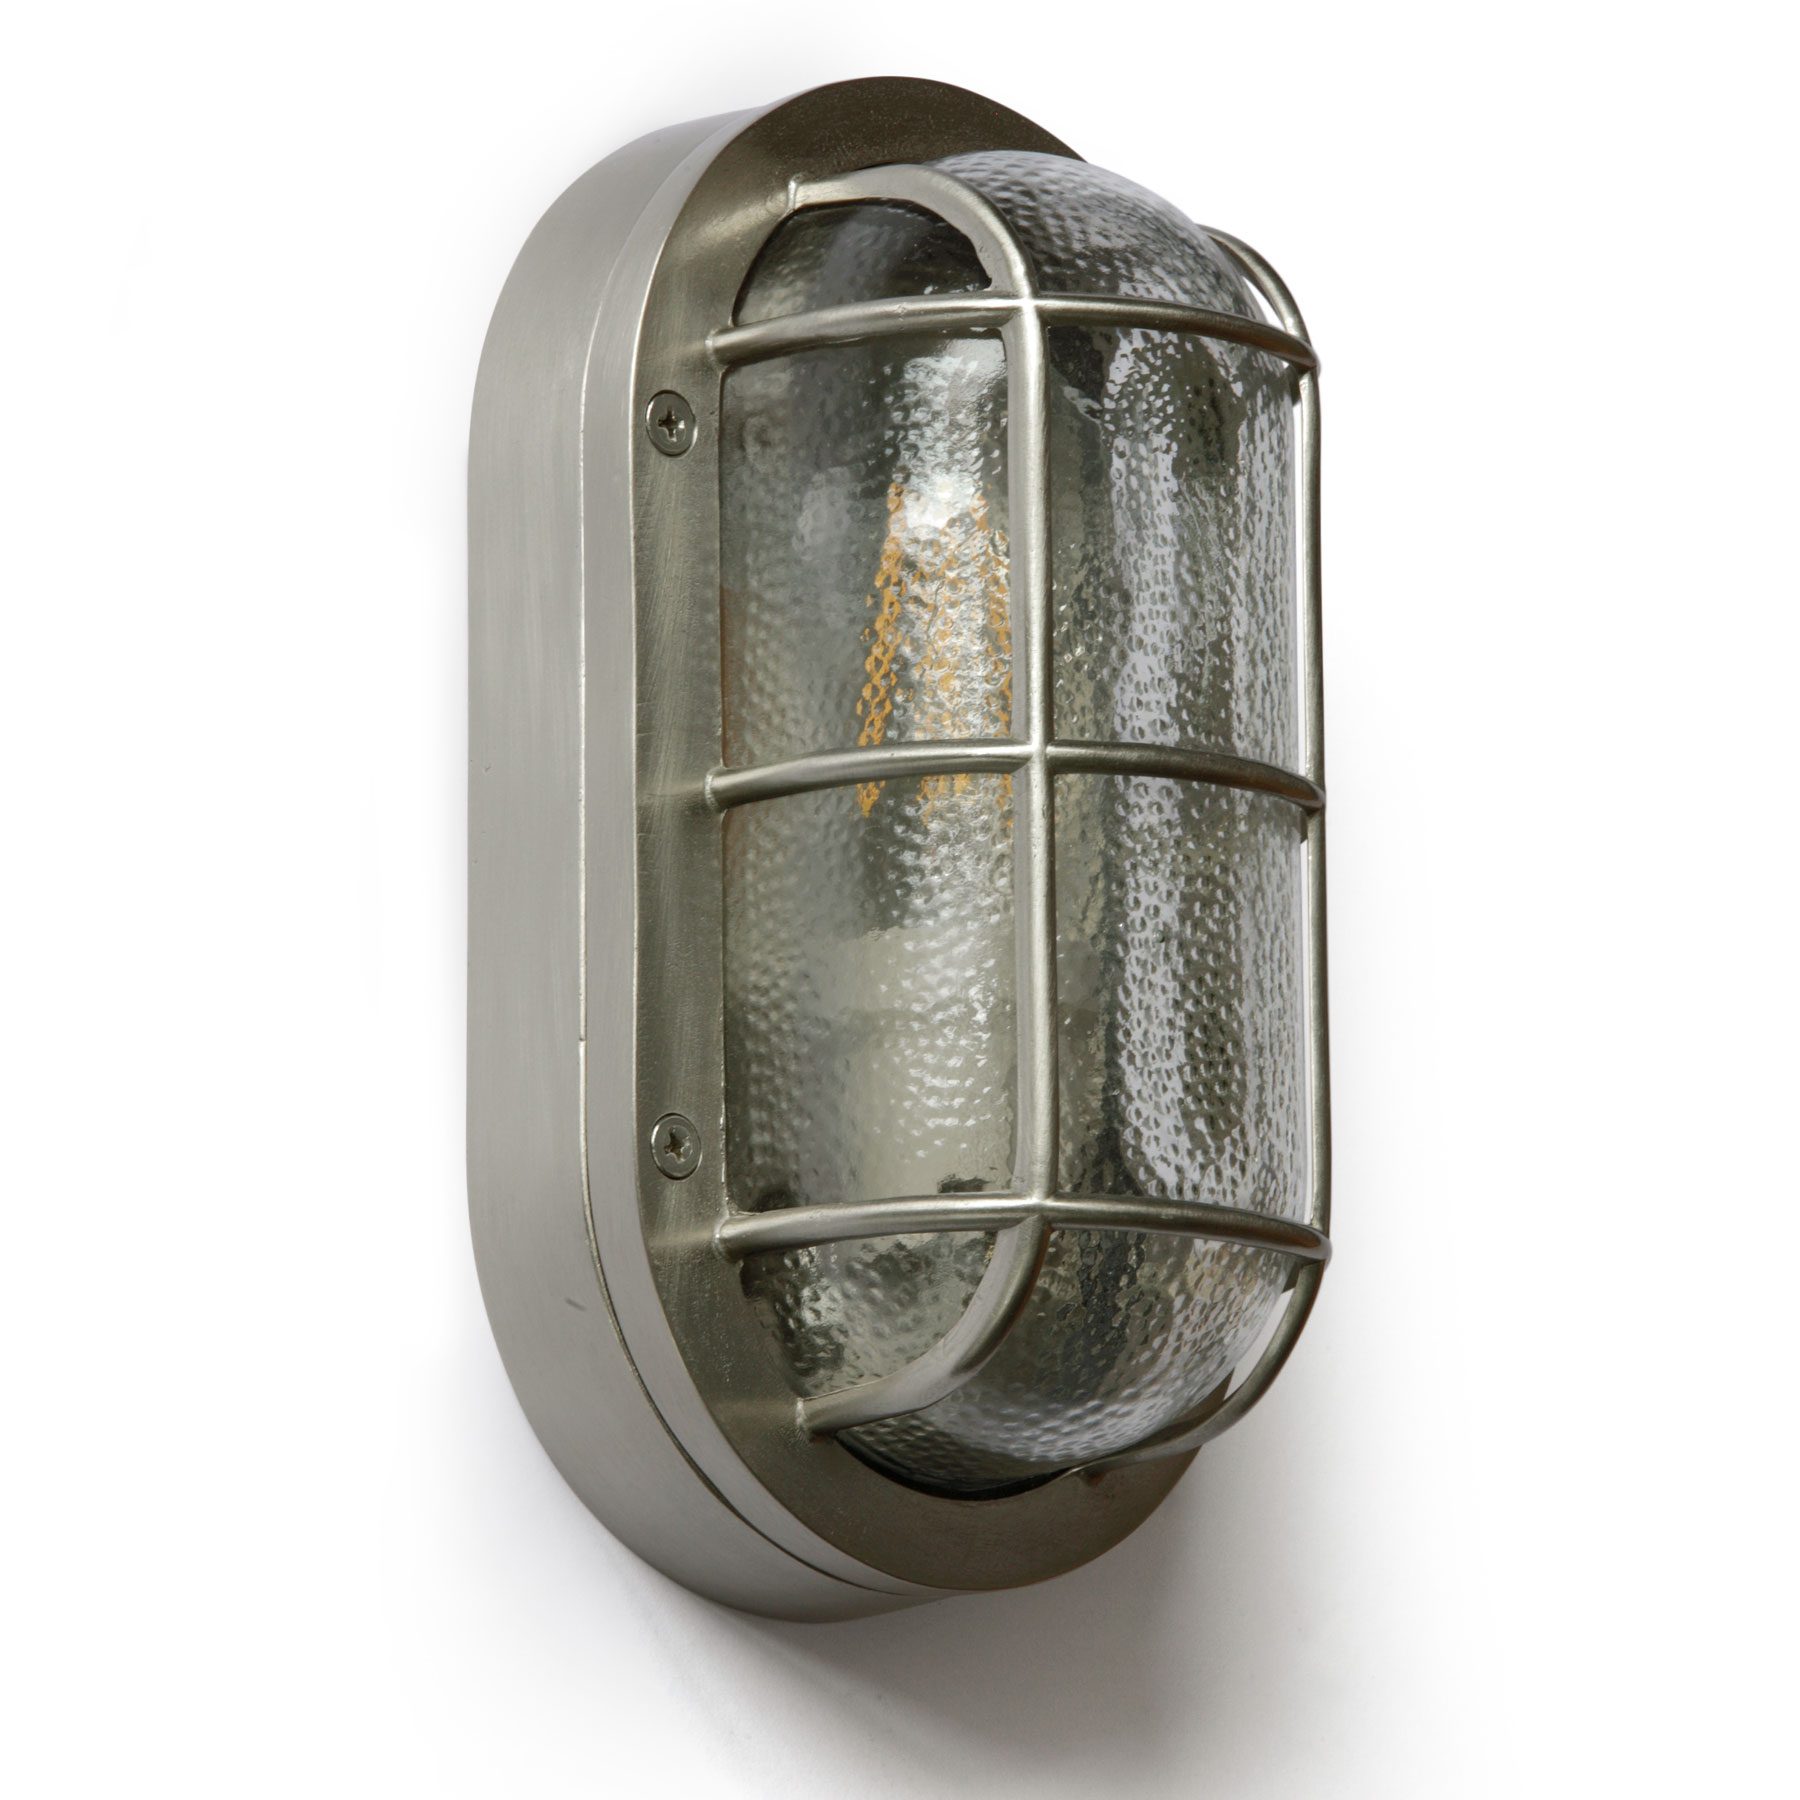 Klassische Keller-Lampe: massives Messing mit Perlglas und Gitter, IP64